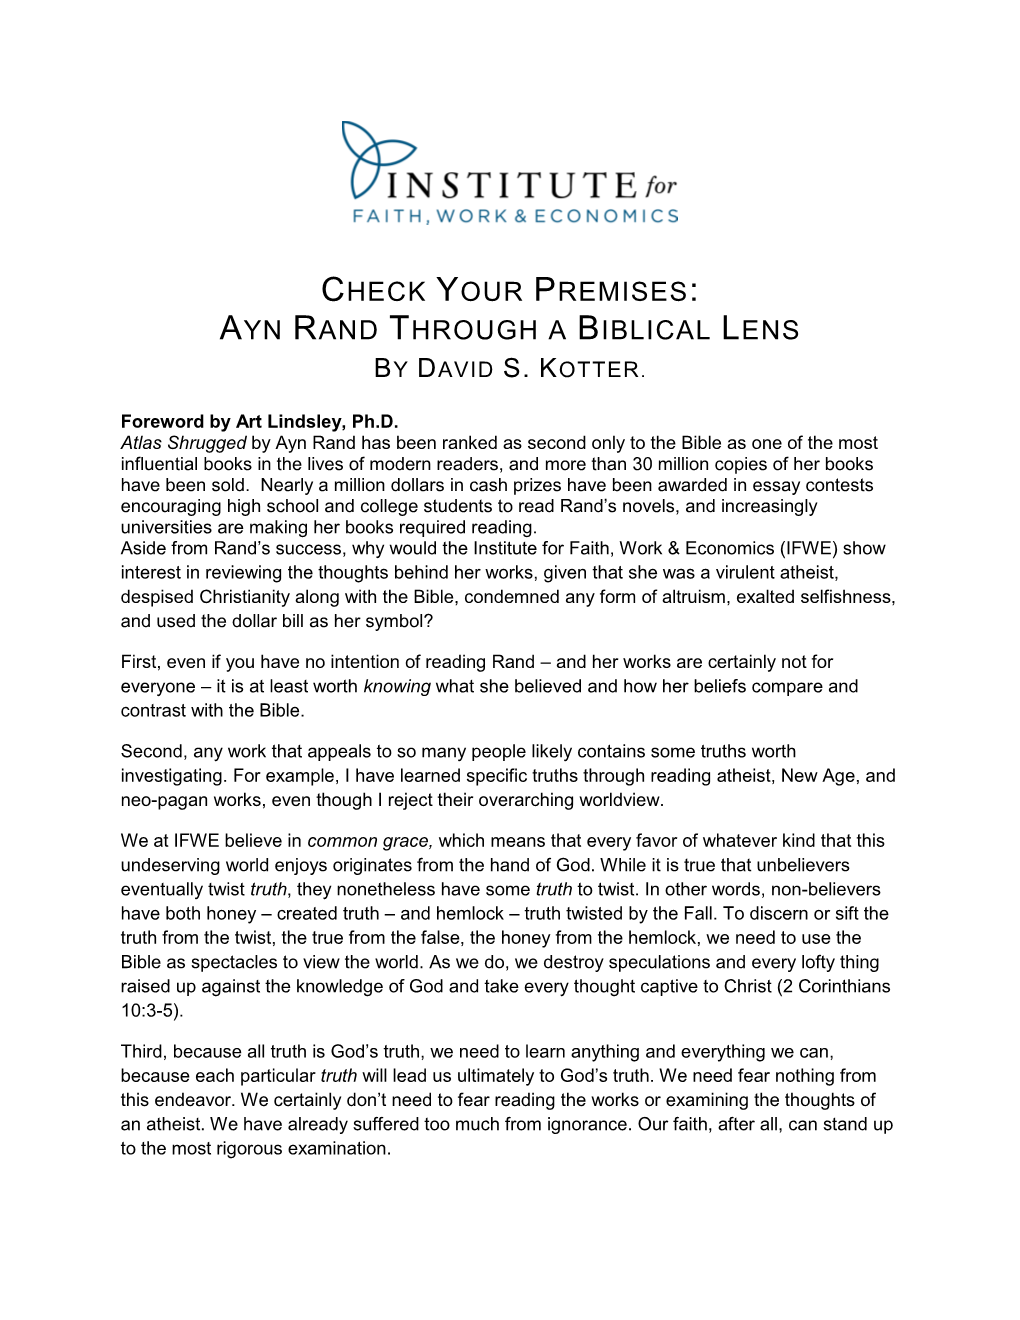 Ayn Rand Through a Biblical Lens by David S